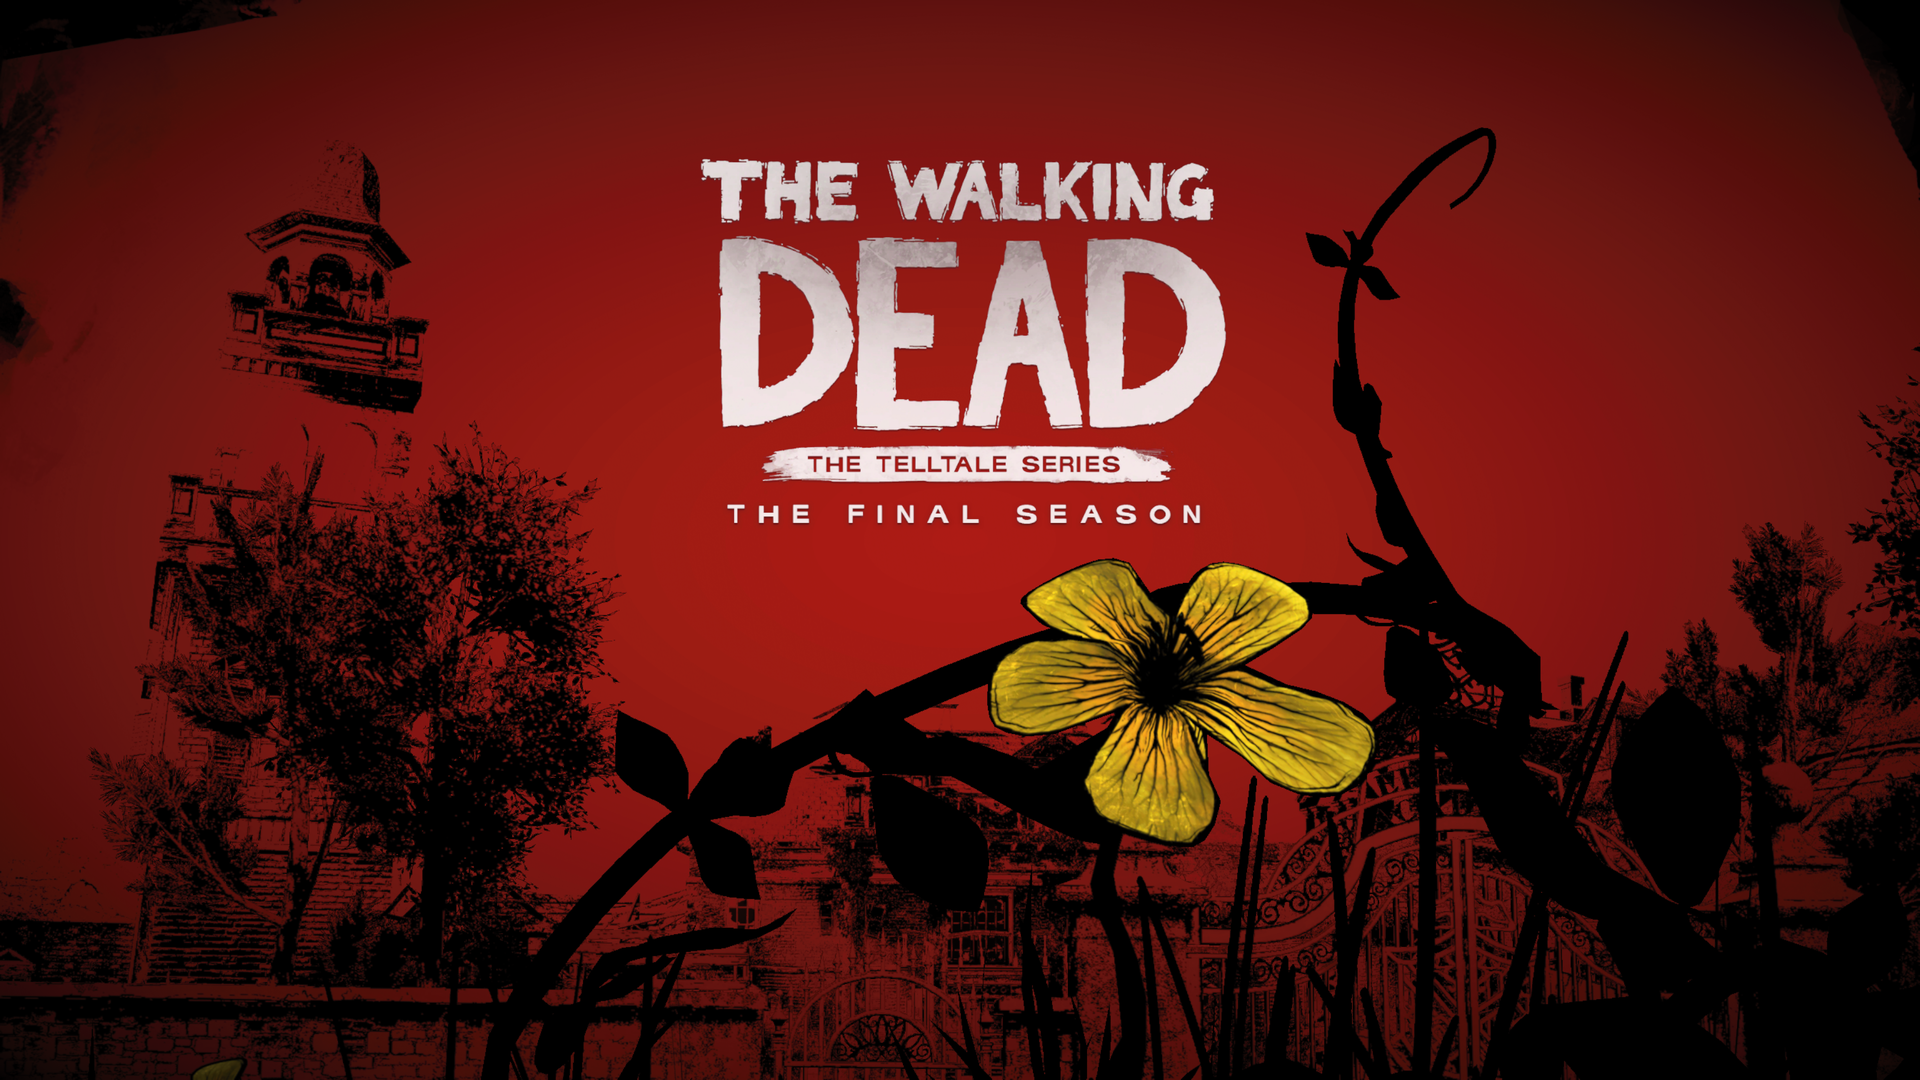 The Walking Dead - The Final Season Episode 2 Review #5